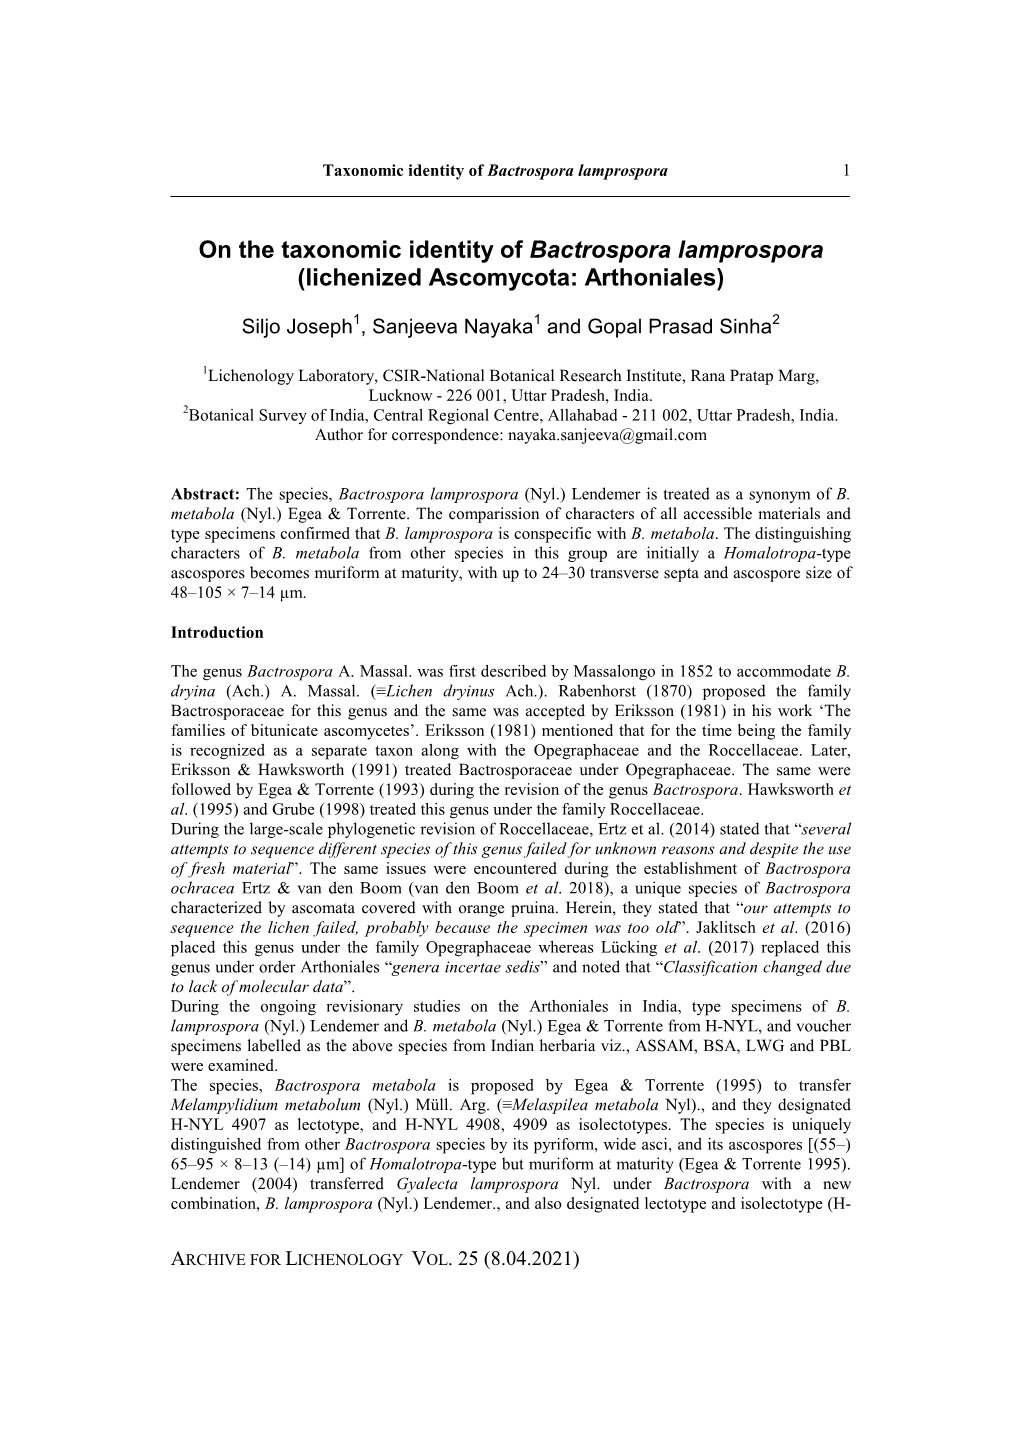 On the Taxonomic Identity of Bactrospora Lamprospora (Lichenized Ascomycota: Arthoniales)